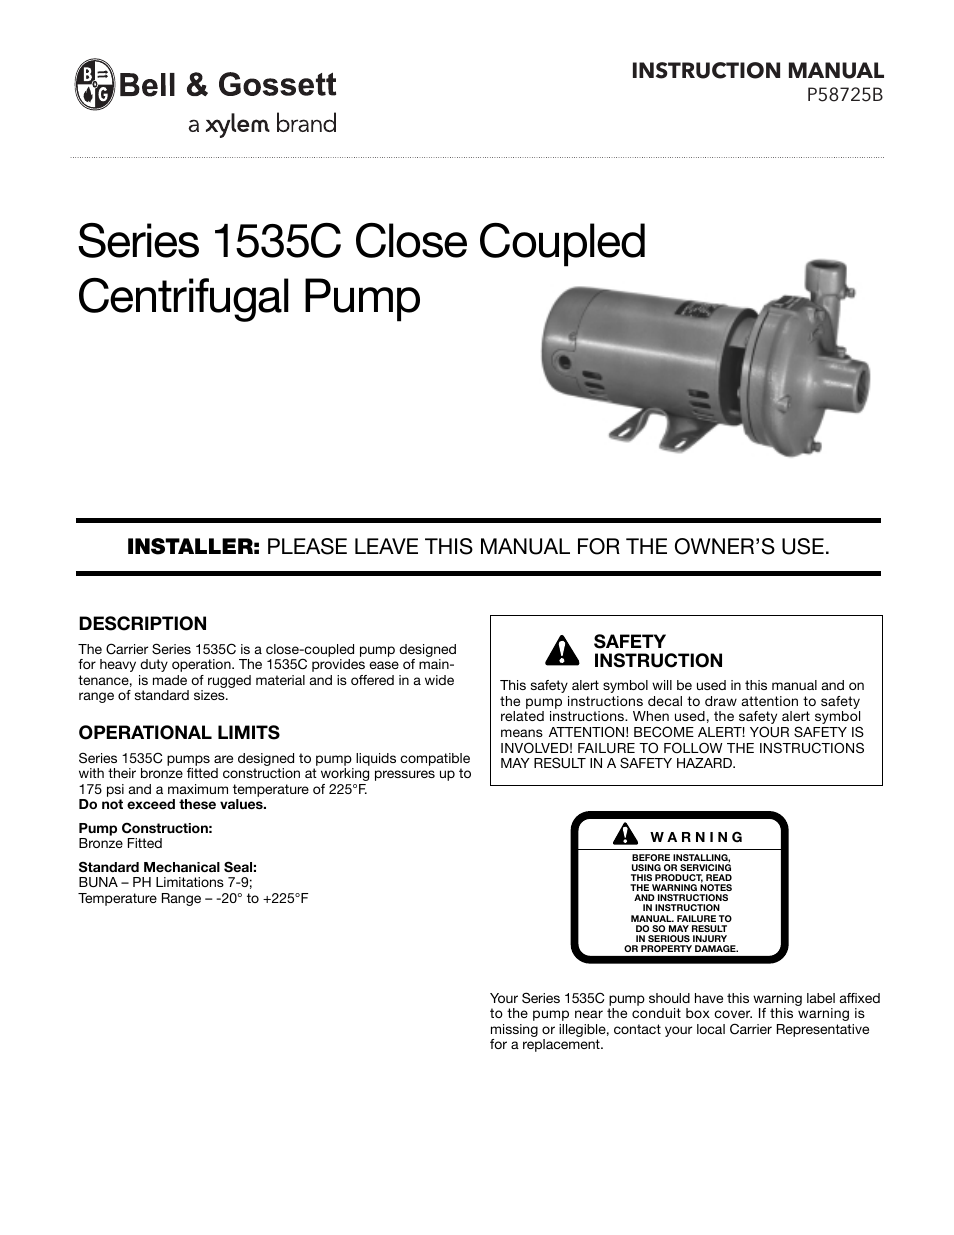 P58725B Series 1535C Close Coupled Centrifugal Pump